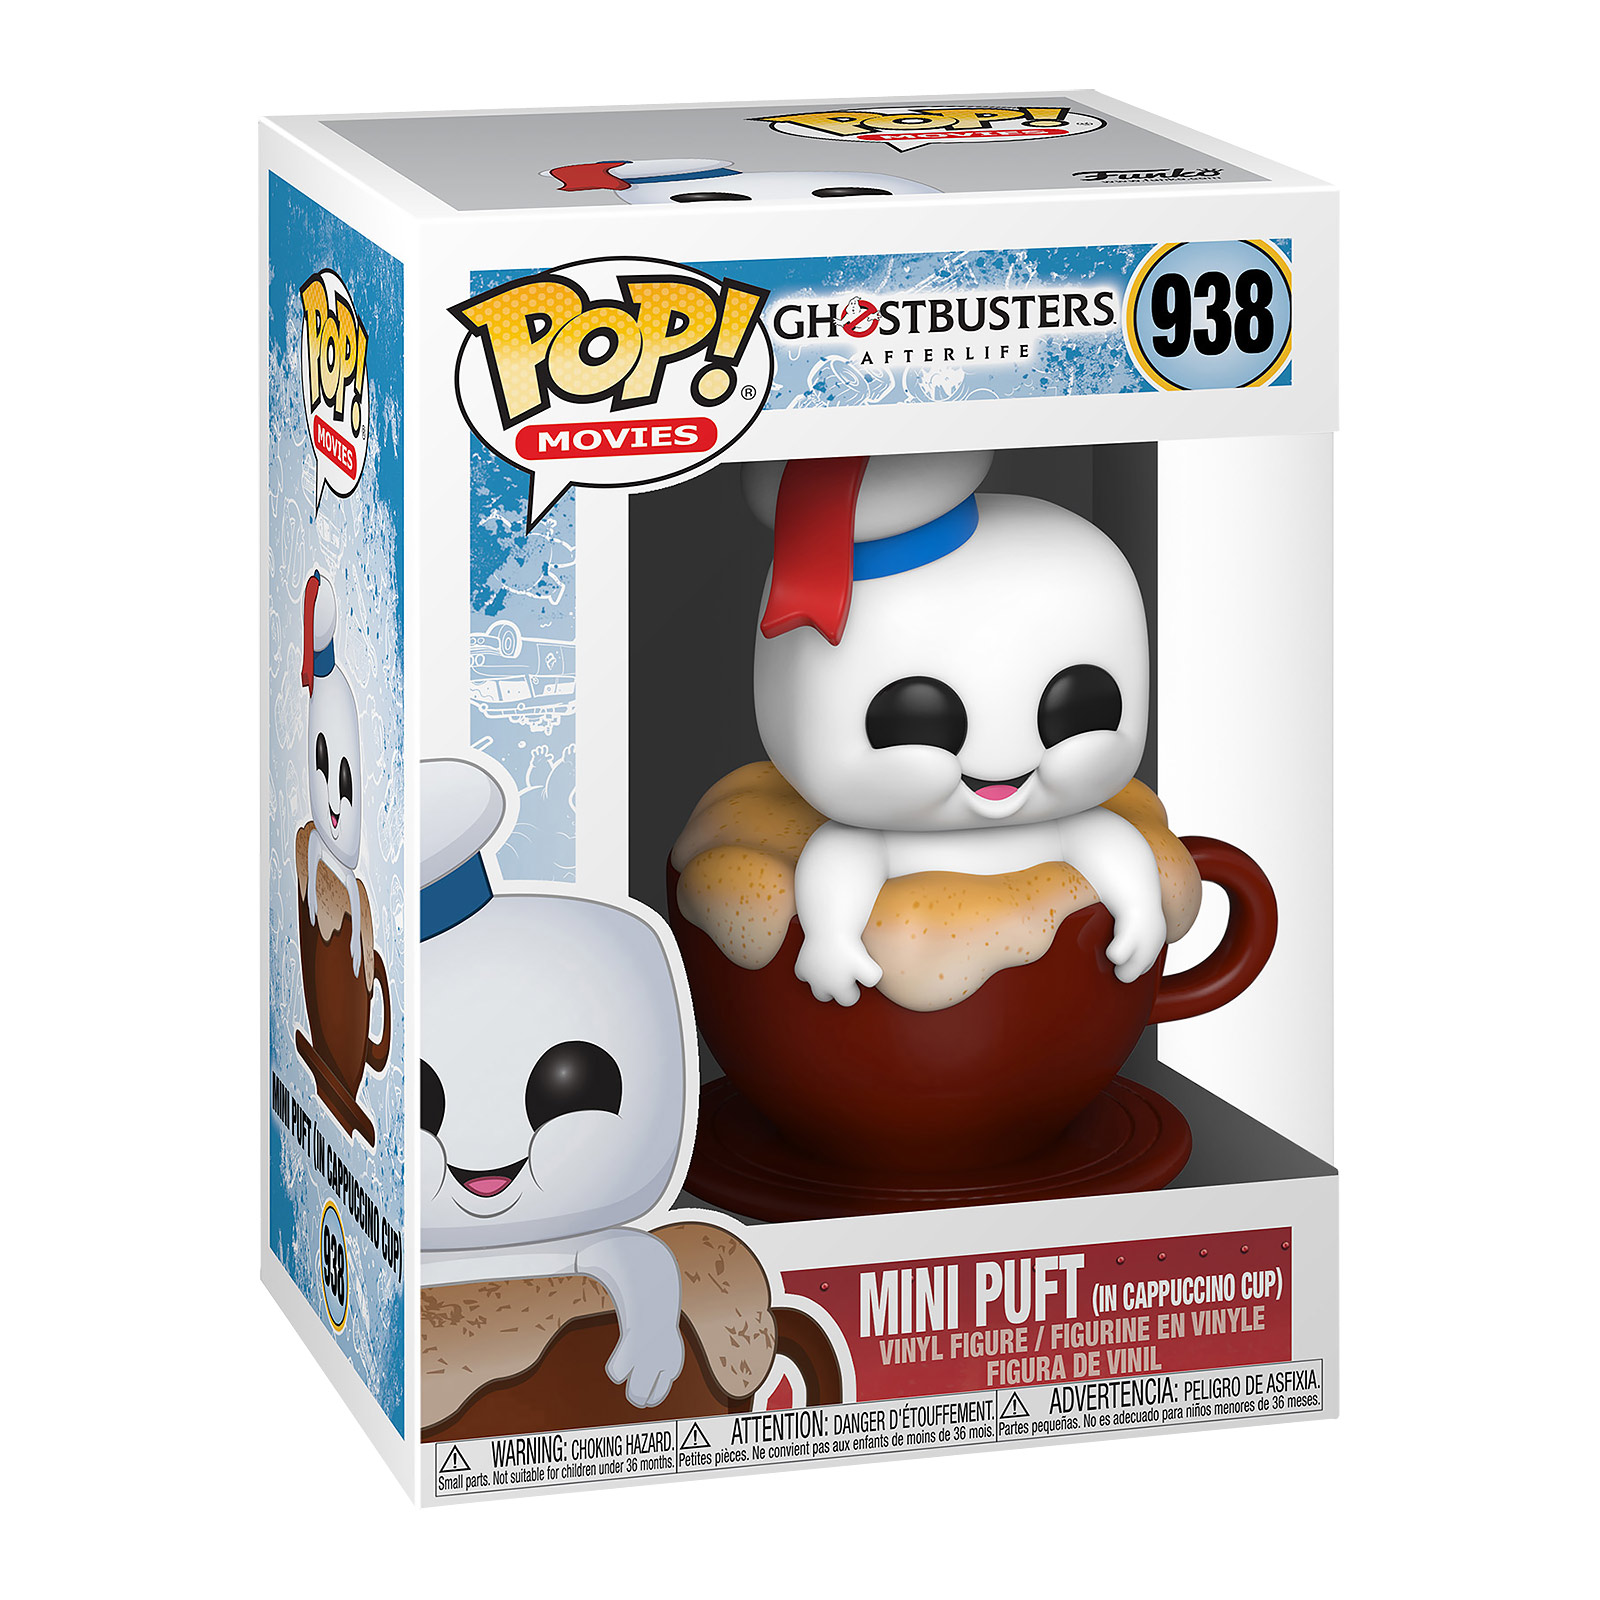 Ghostbusters - Marshmallow Man Cappucchino Funko Pop Figurine